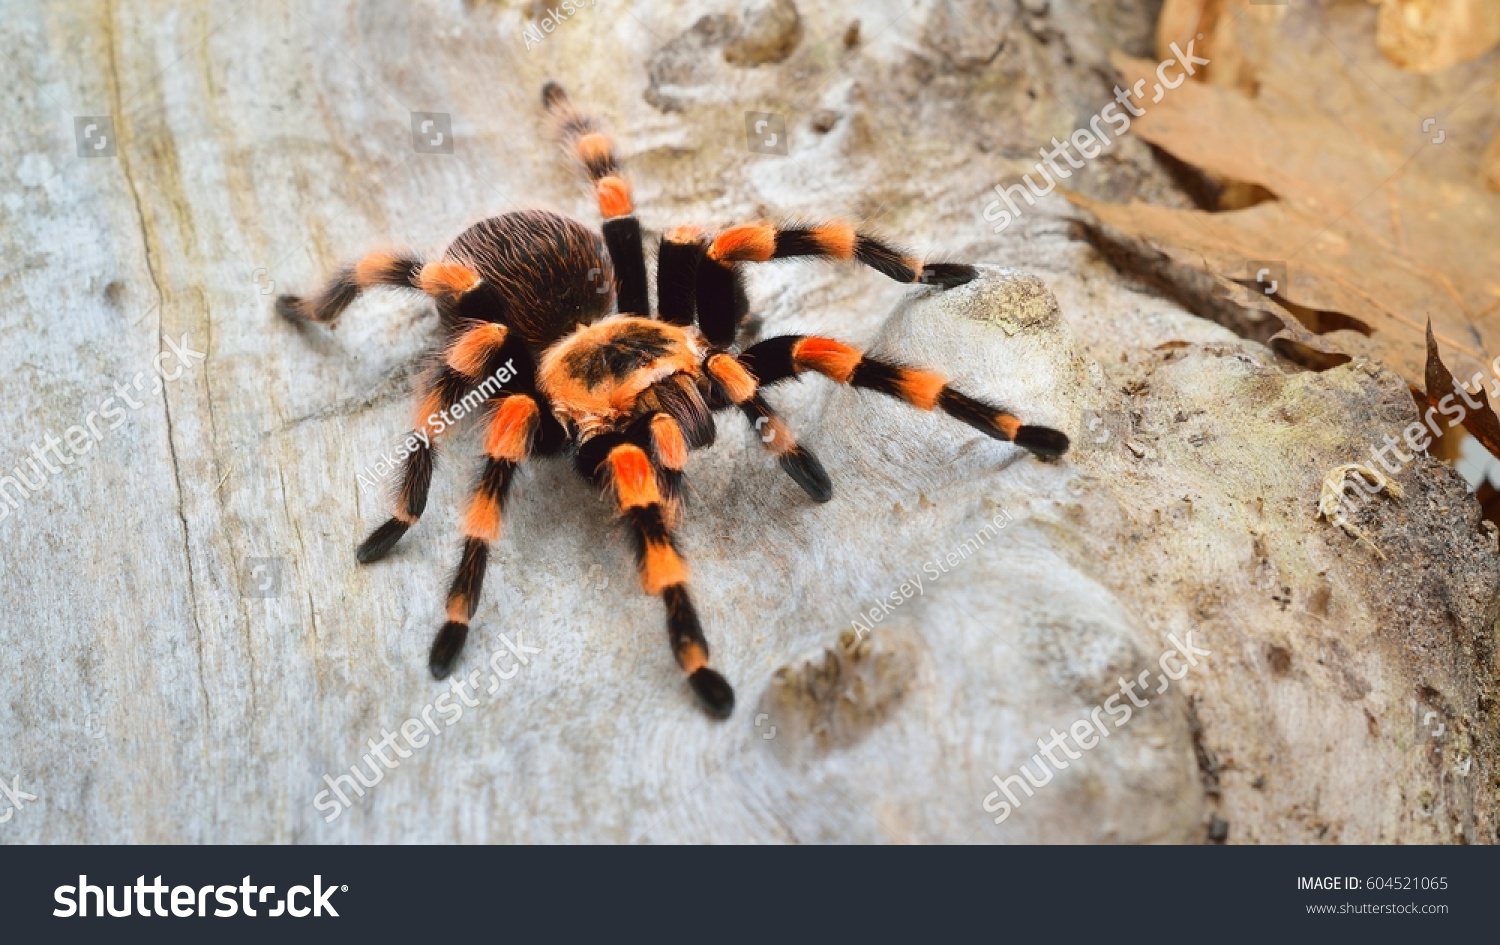 Birdeater tarantula spider Brachypelma smithi in natural forest environment. Bright orange colourful giant arachnid. #604521065